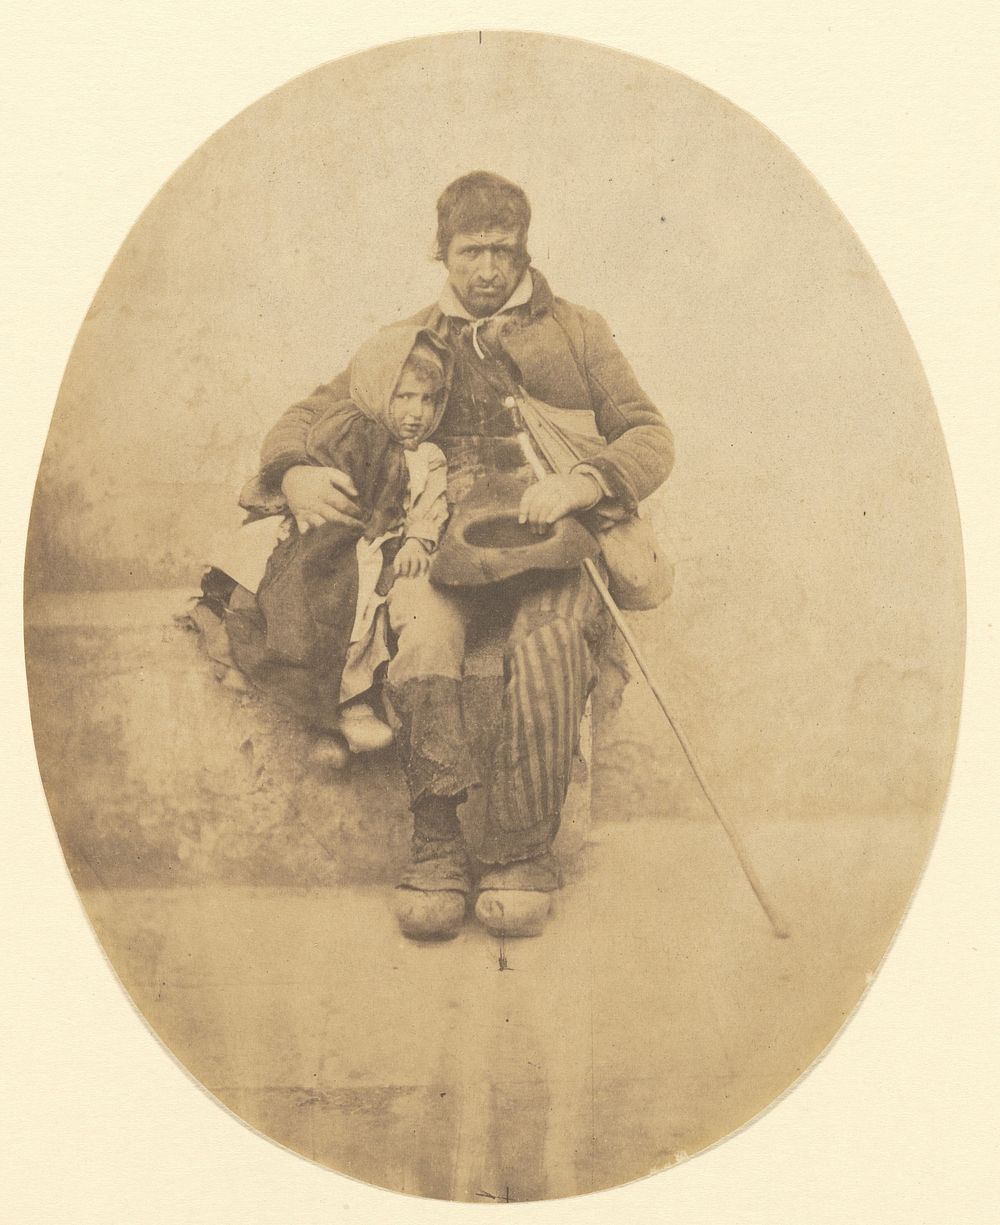 Mendiants (Beggars) by André Adolphe Eugène Disdéri